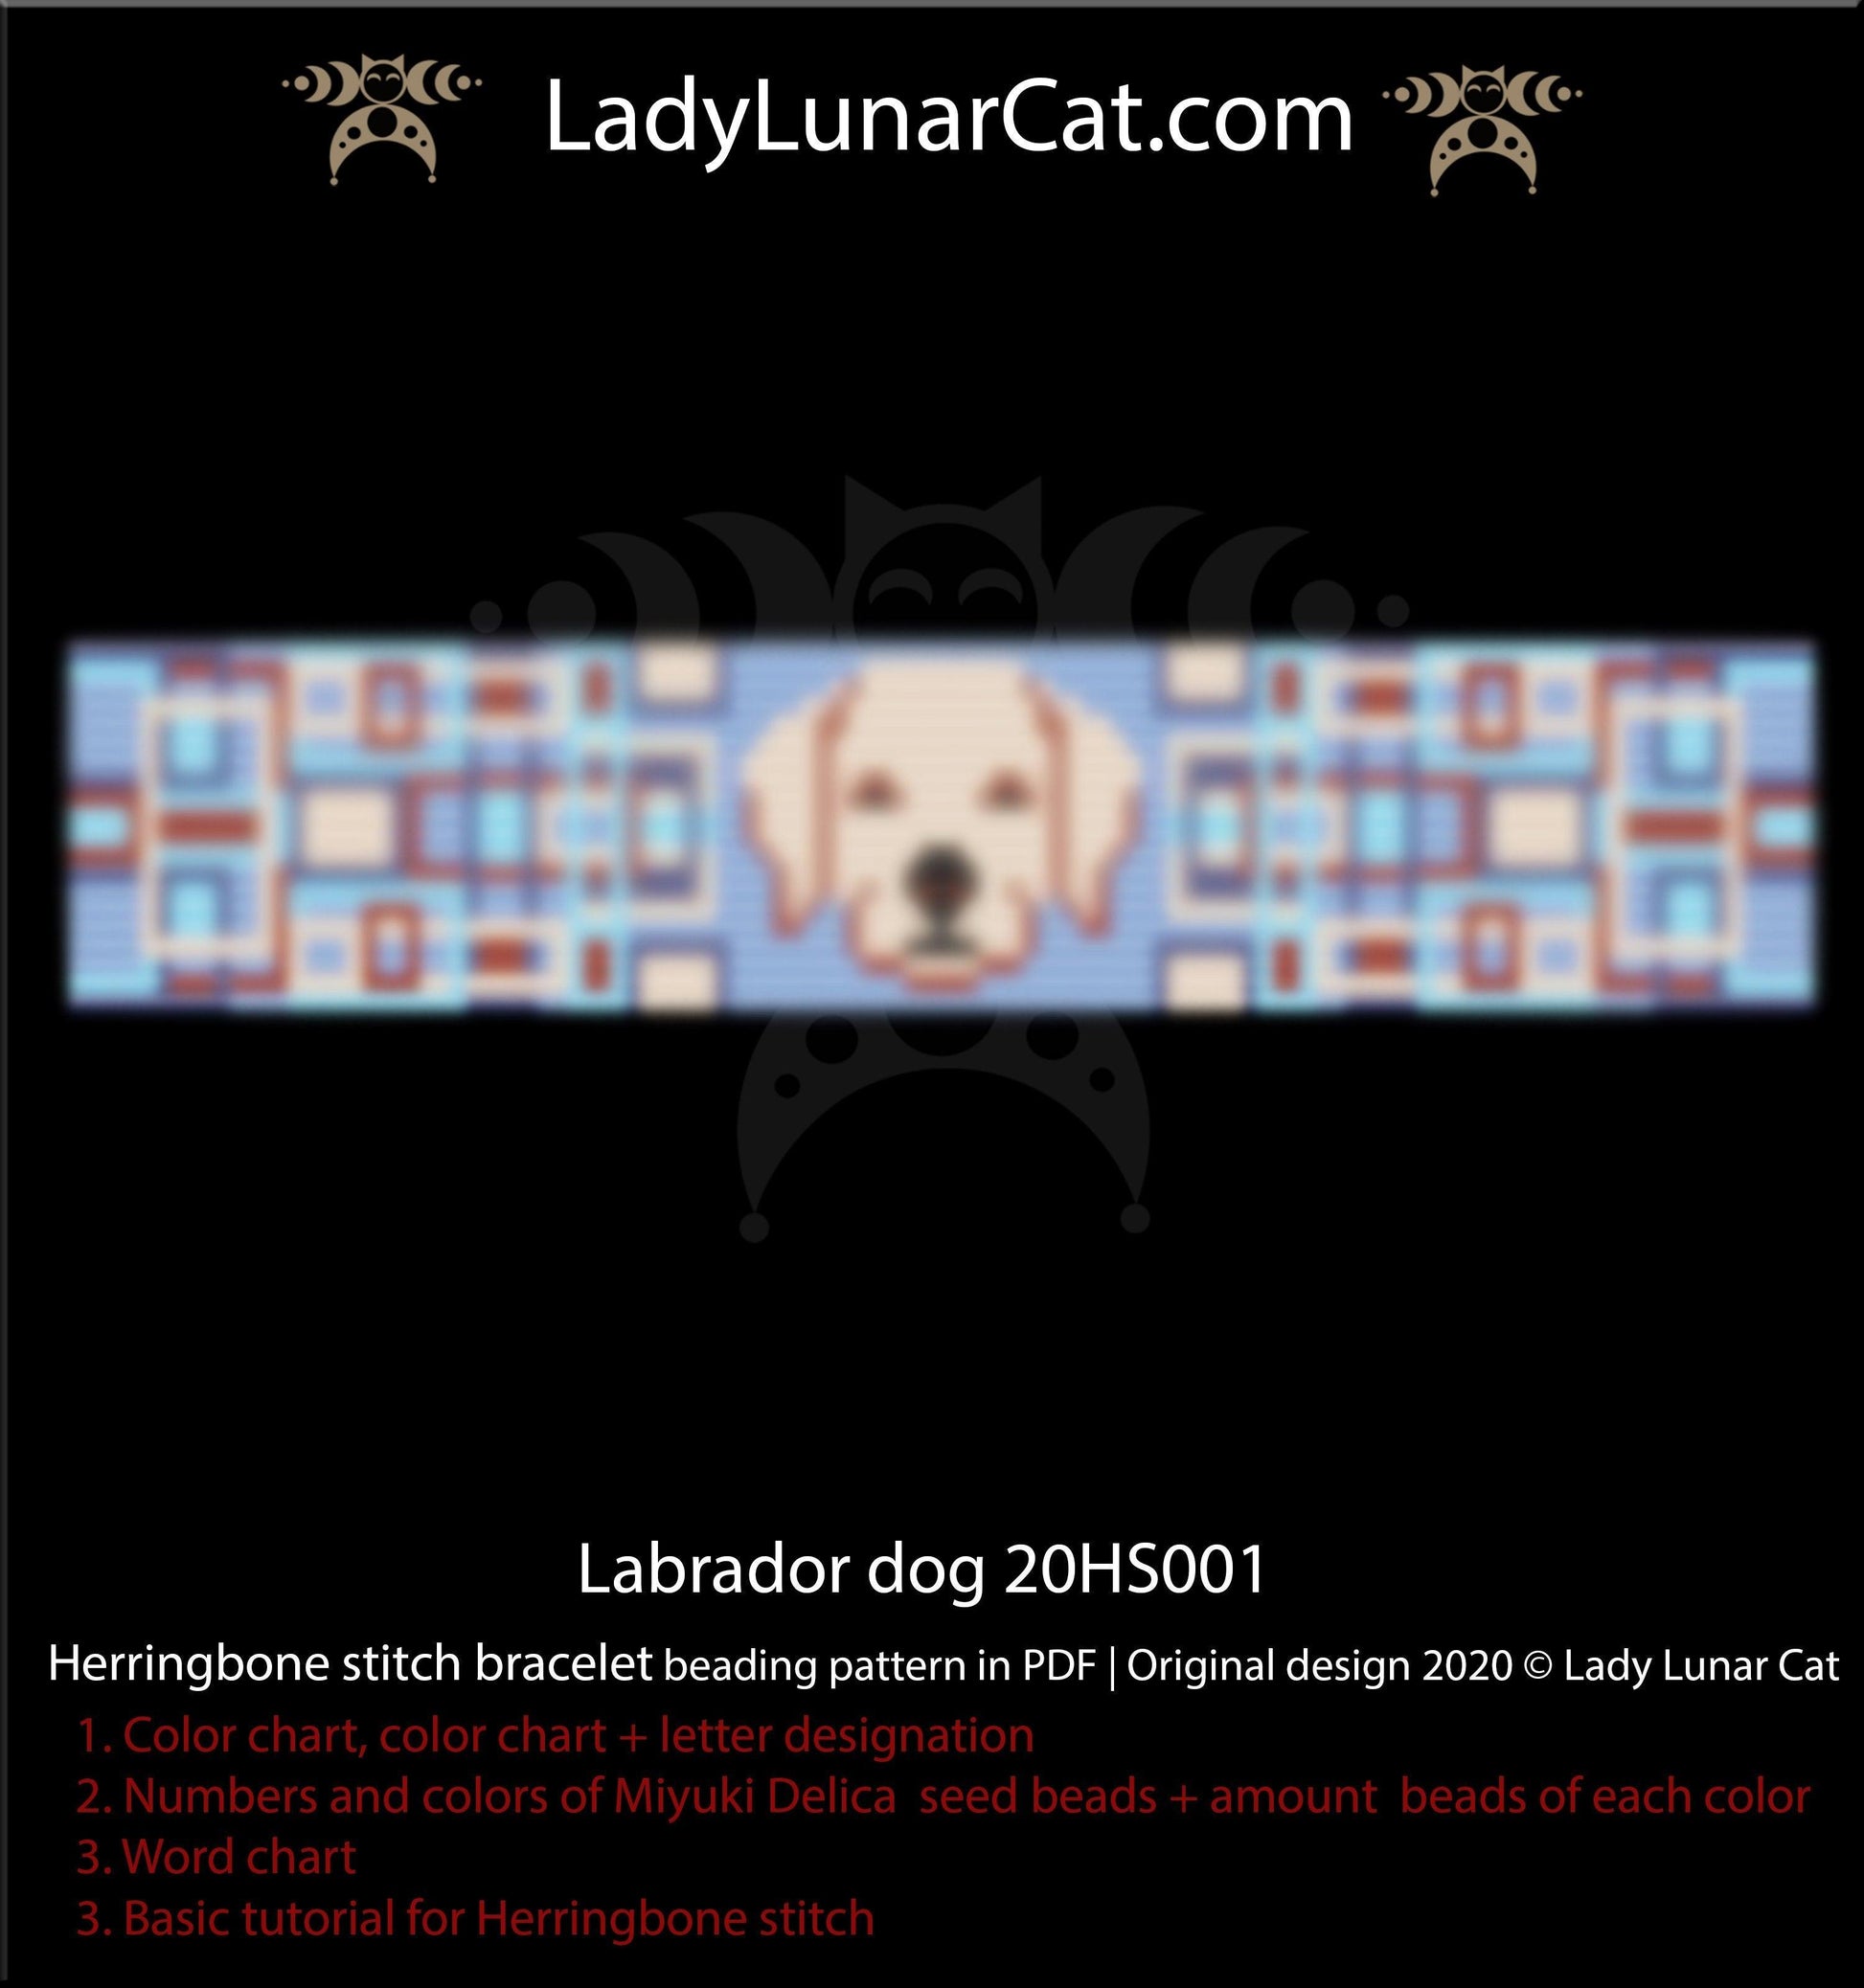 Herringbone stitch pattern for bracelets - Labrador dog 20HS001 LadyLunarCat